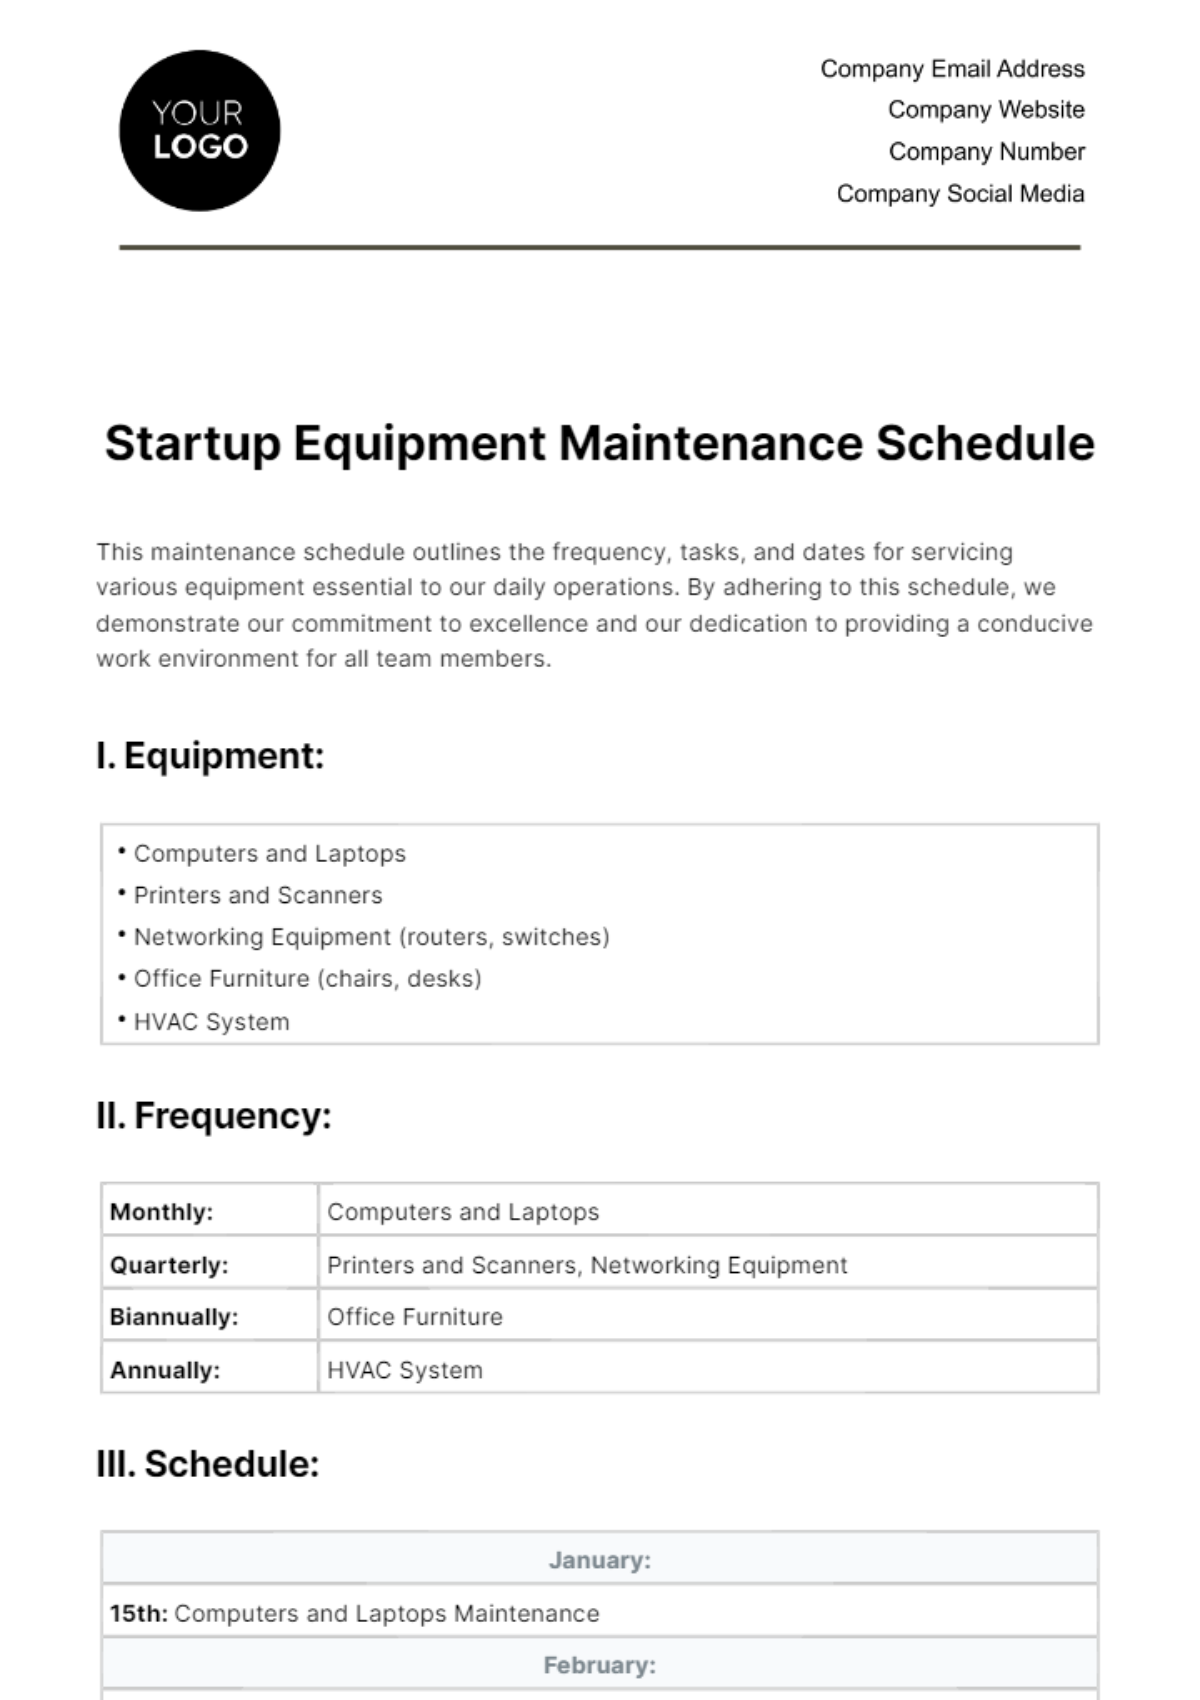 Free Startup Equipment Maintenance Schedule Template